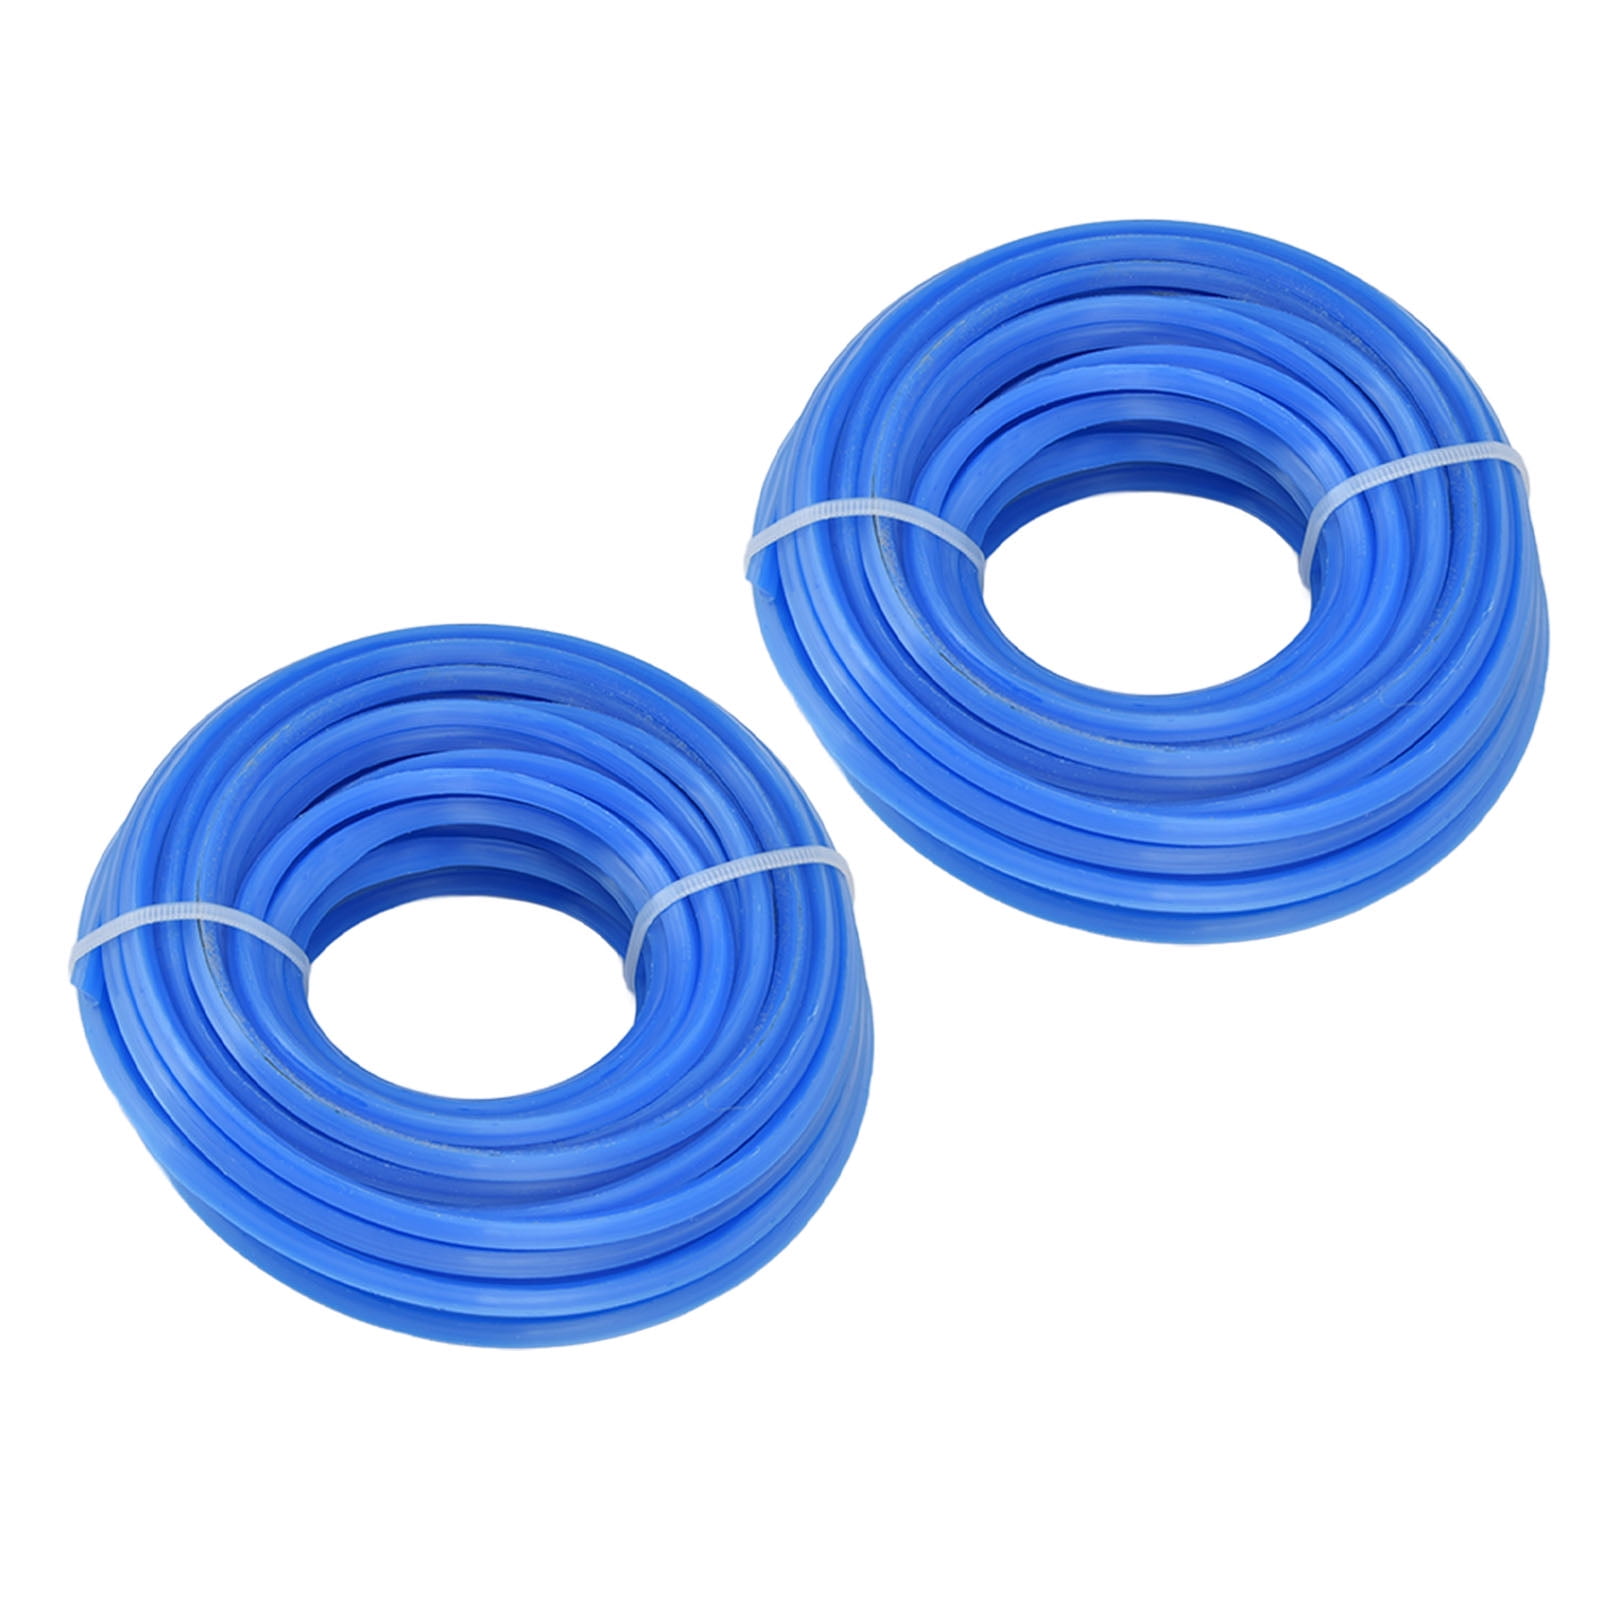 Trimmer Line, Blue 4mm Trimmer Line Nylon For Lawn Mower 5m / 16.4ft,10m / 32.8ft - Walmart.com